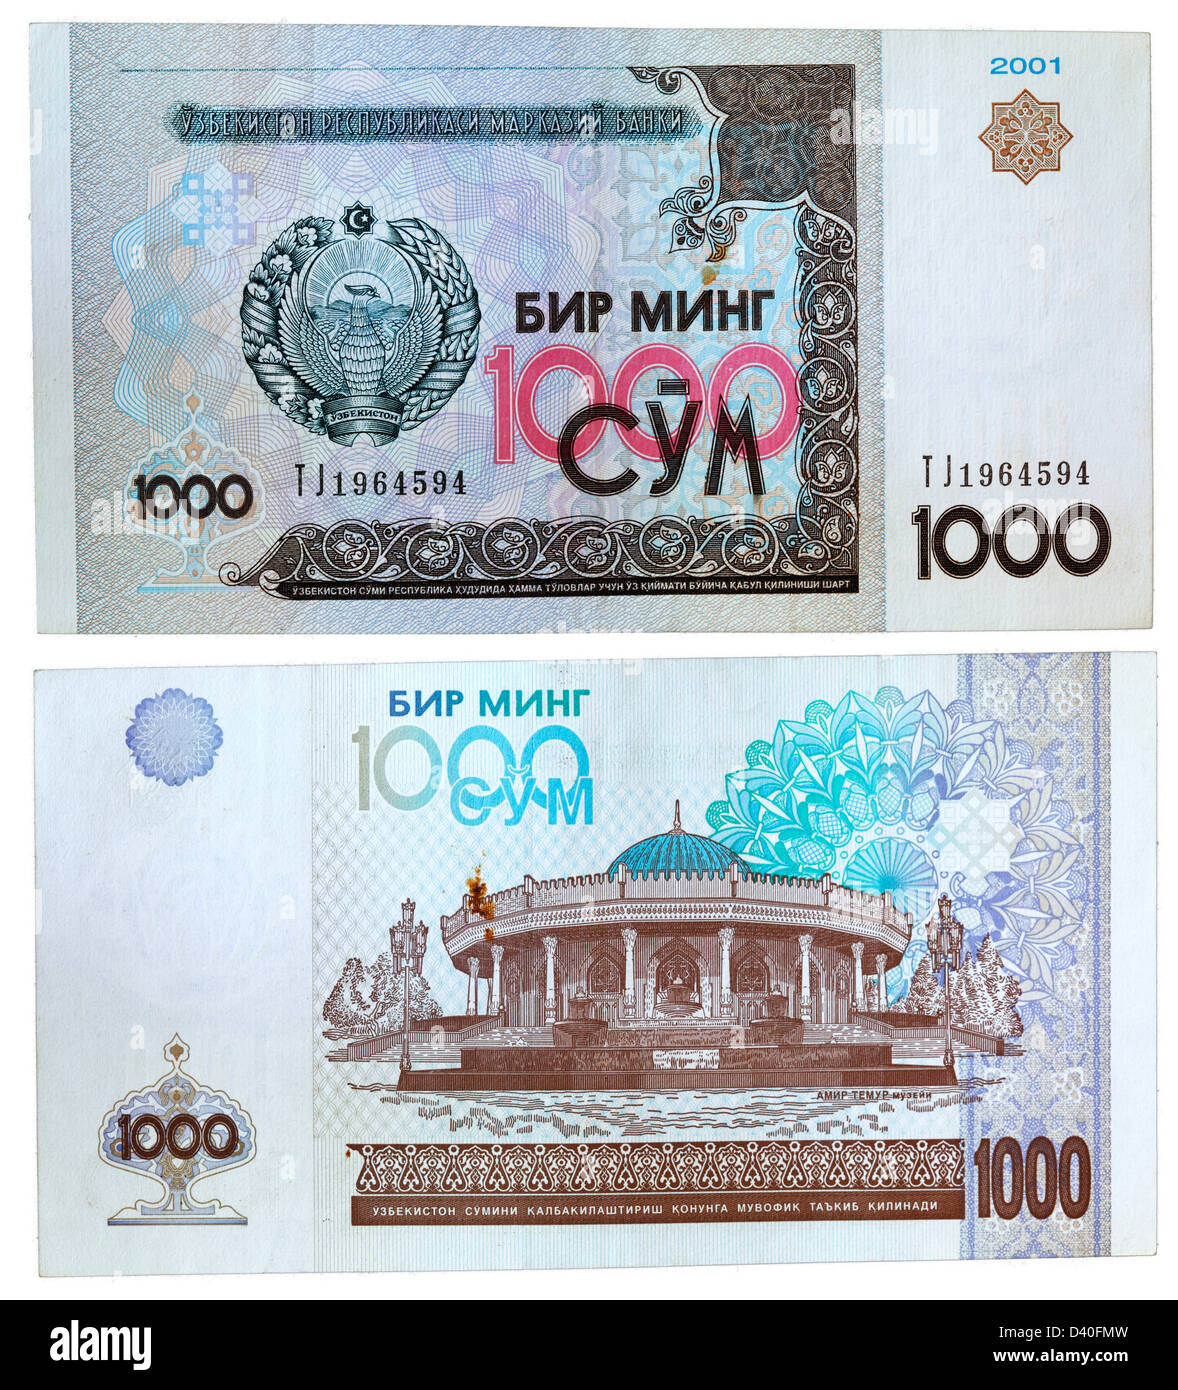 1000 Som banknote, Amir Timur Museum in Tashkent, Uzbekistan, 2001 Stock Photo